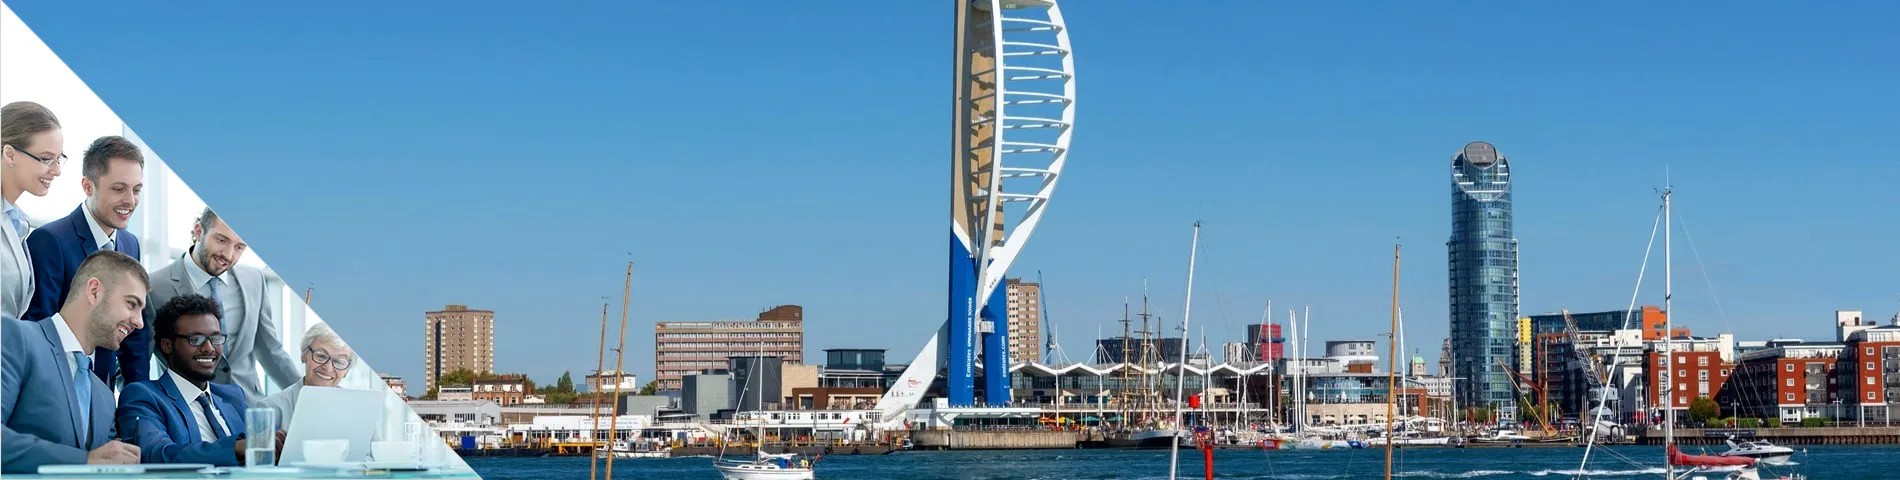 Portsmouth - Business en Groupe